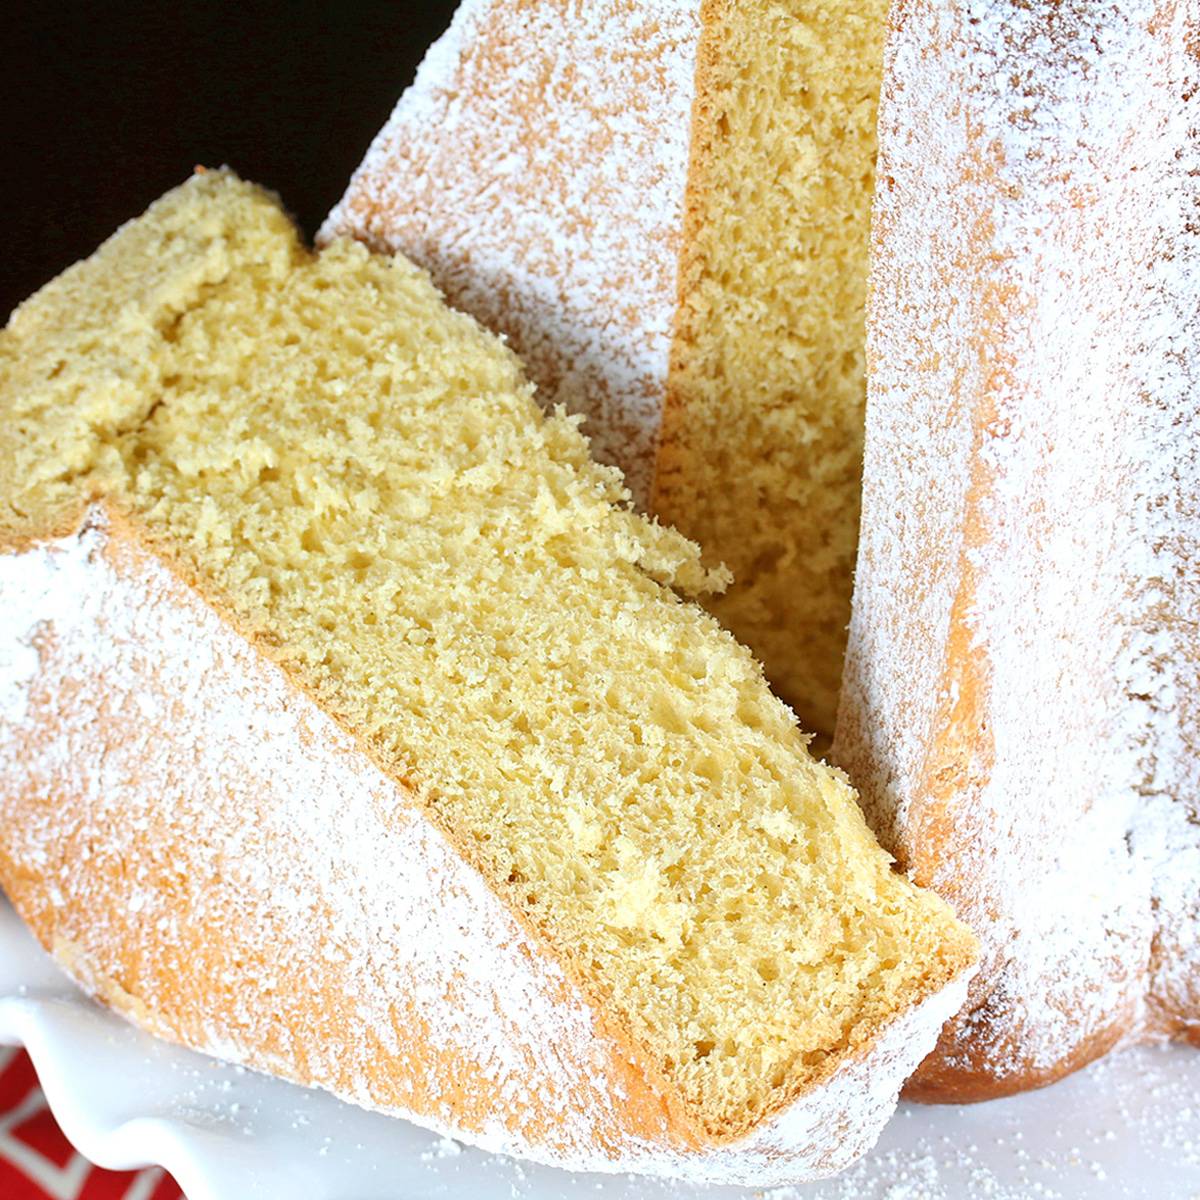 pandoro recipe traditional authentic Verona Christmas bread cake yeast lemon best Italian